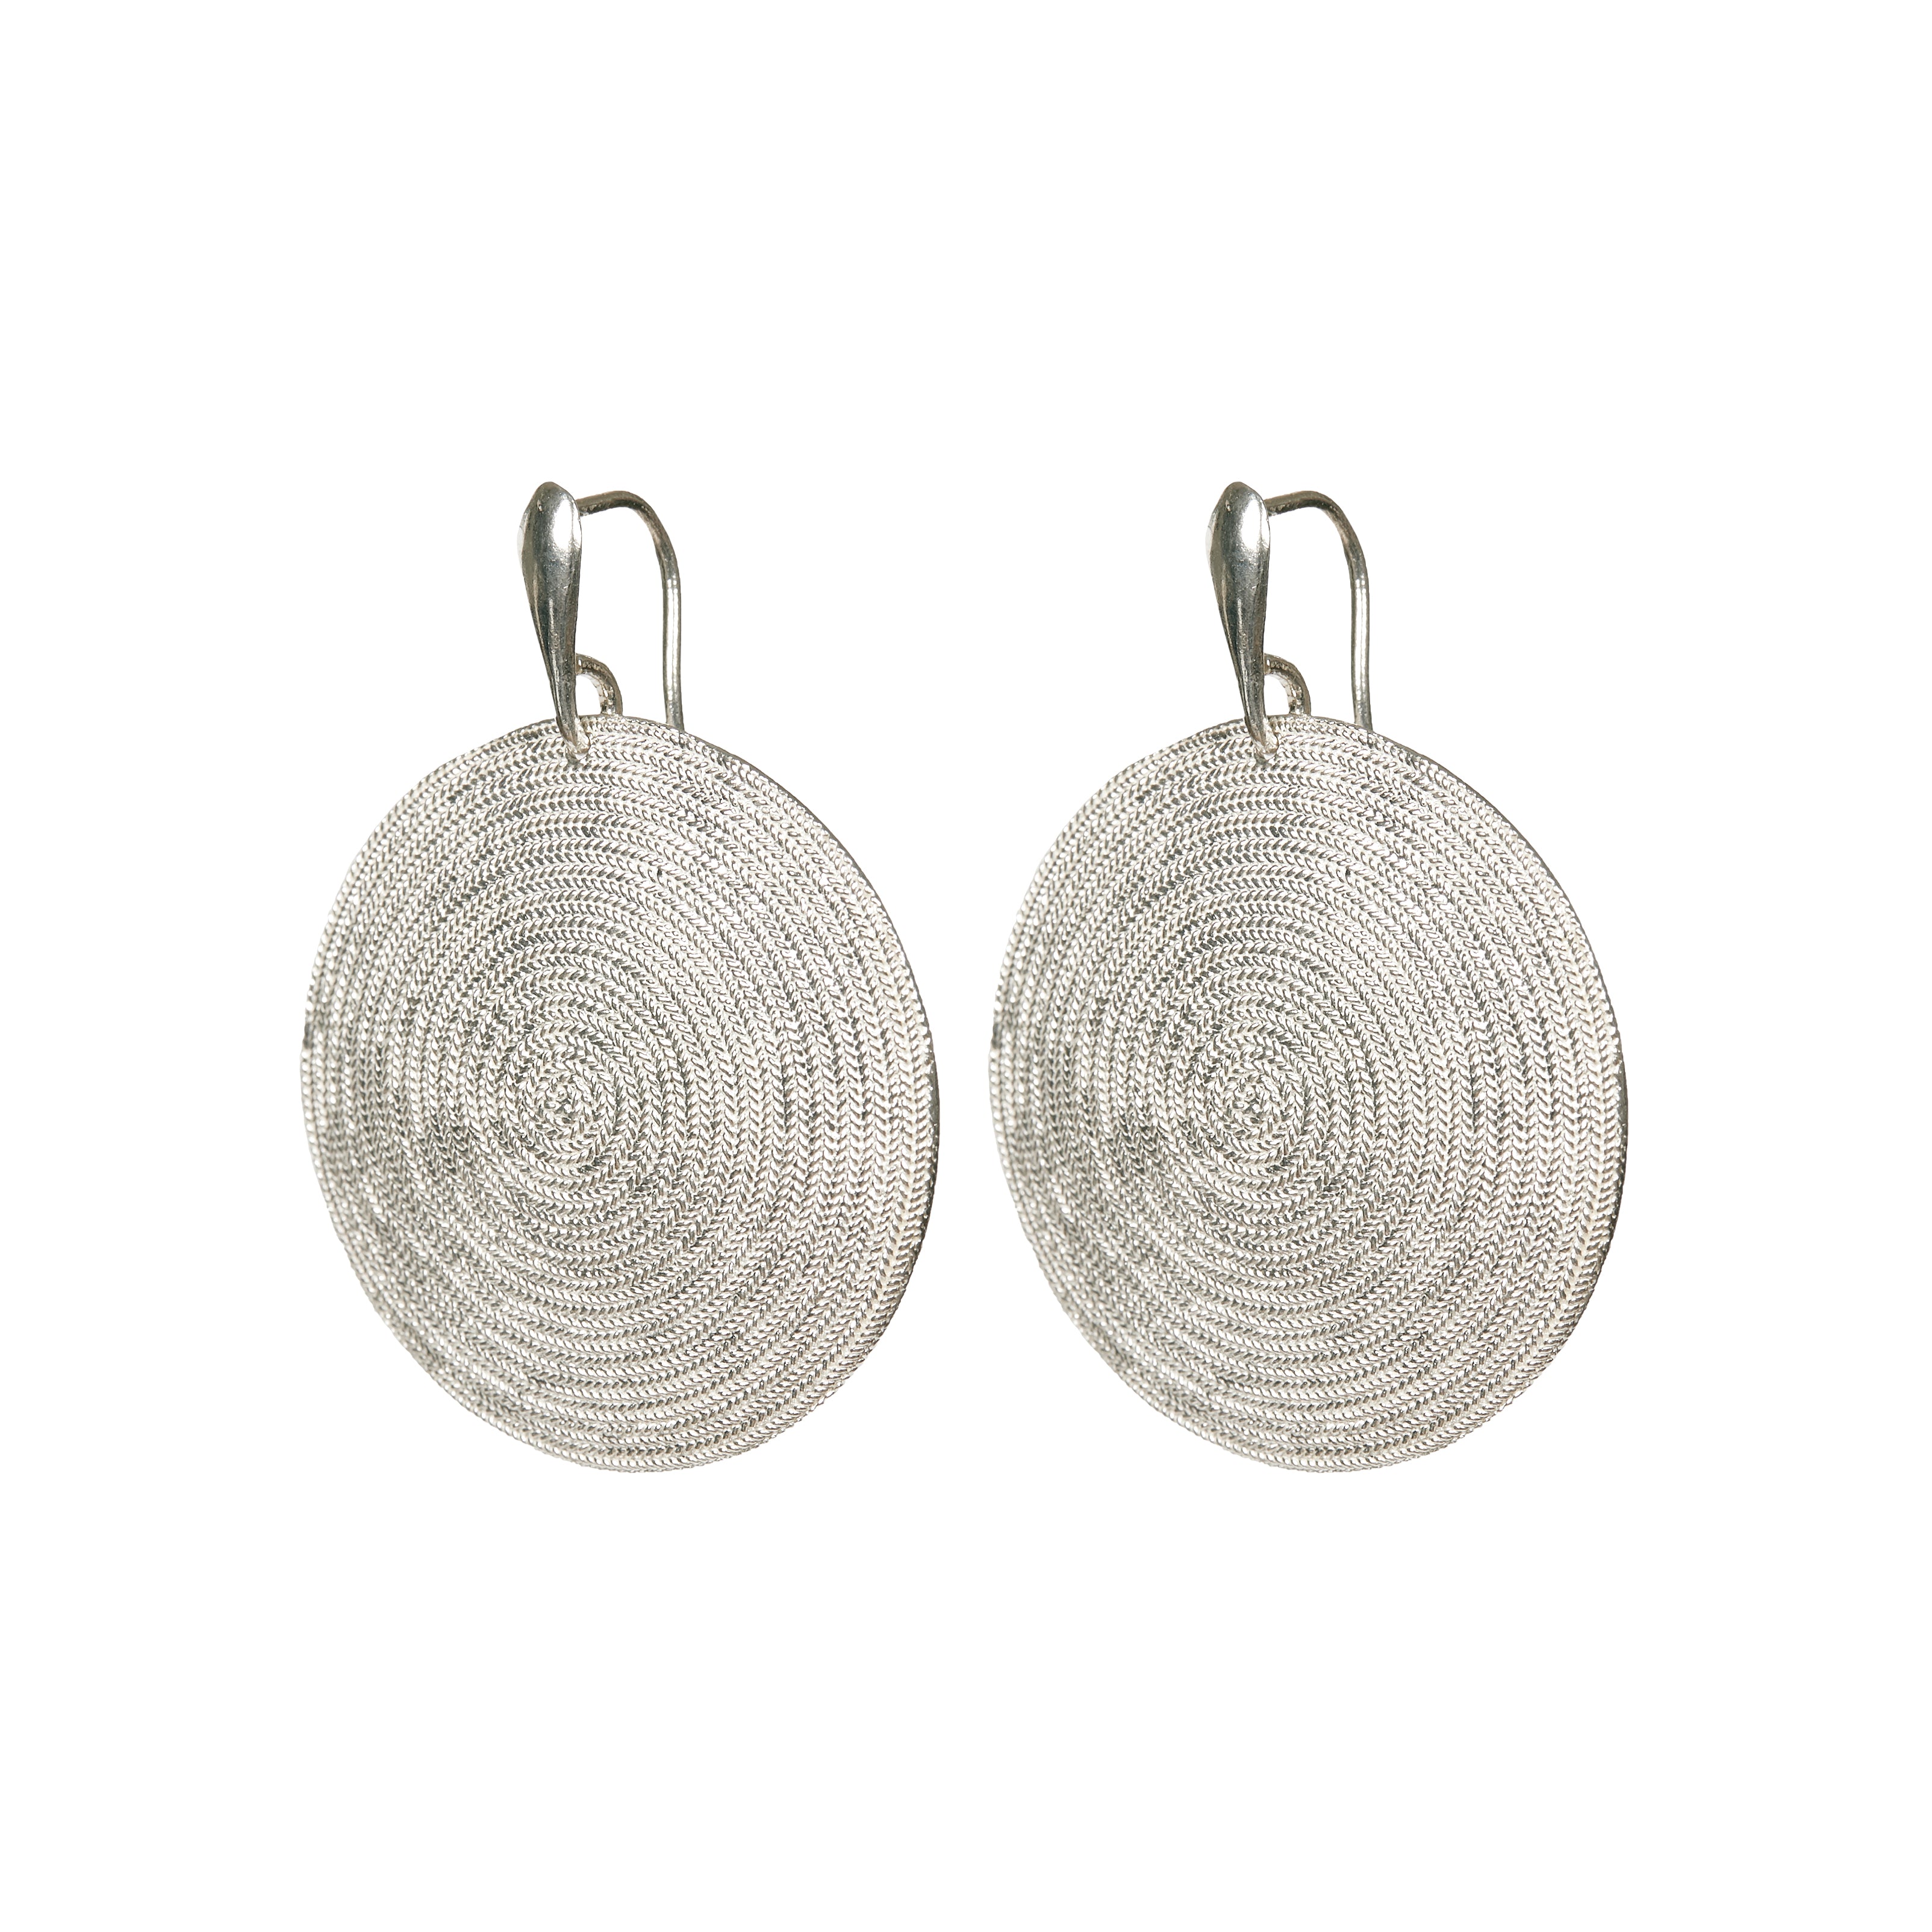 Earrings MAMISOL - Watermark - Silver 925/1000 | MAMISOL MEA AYAYA 